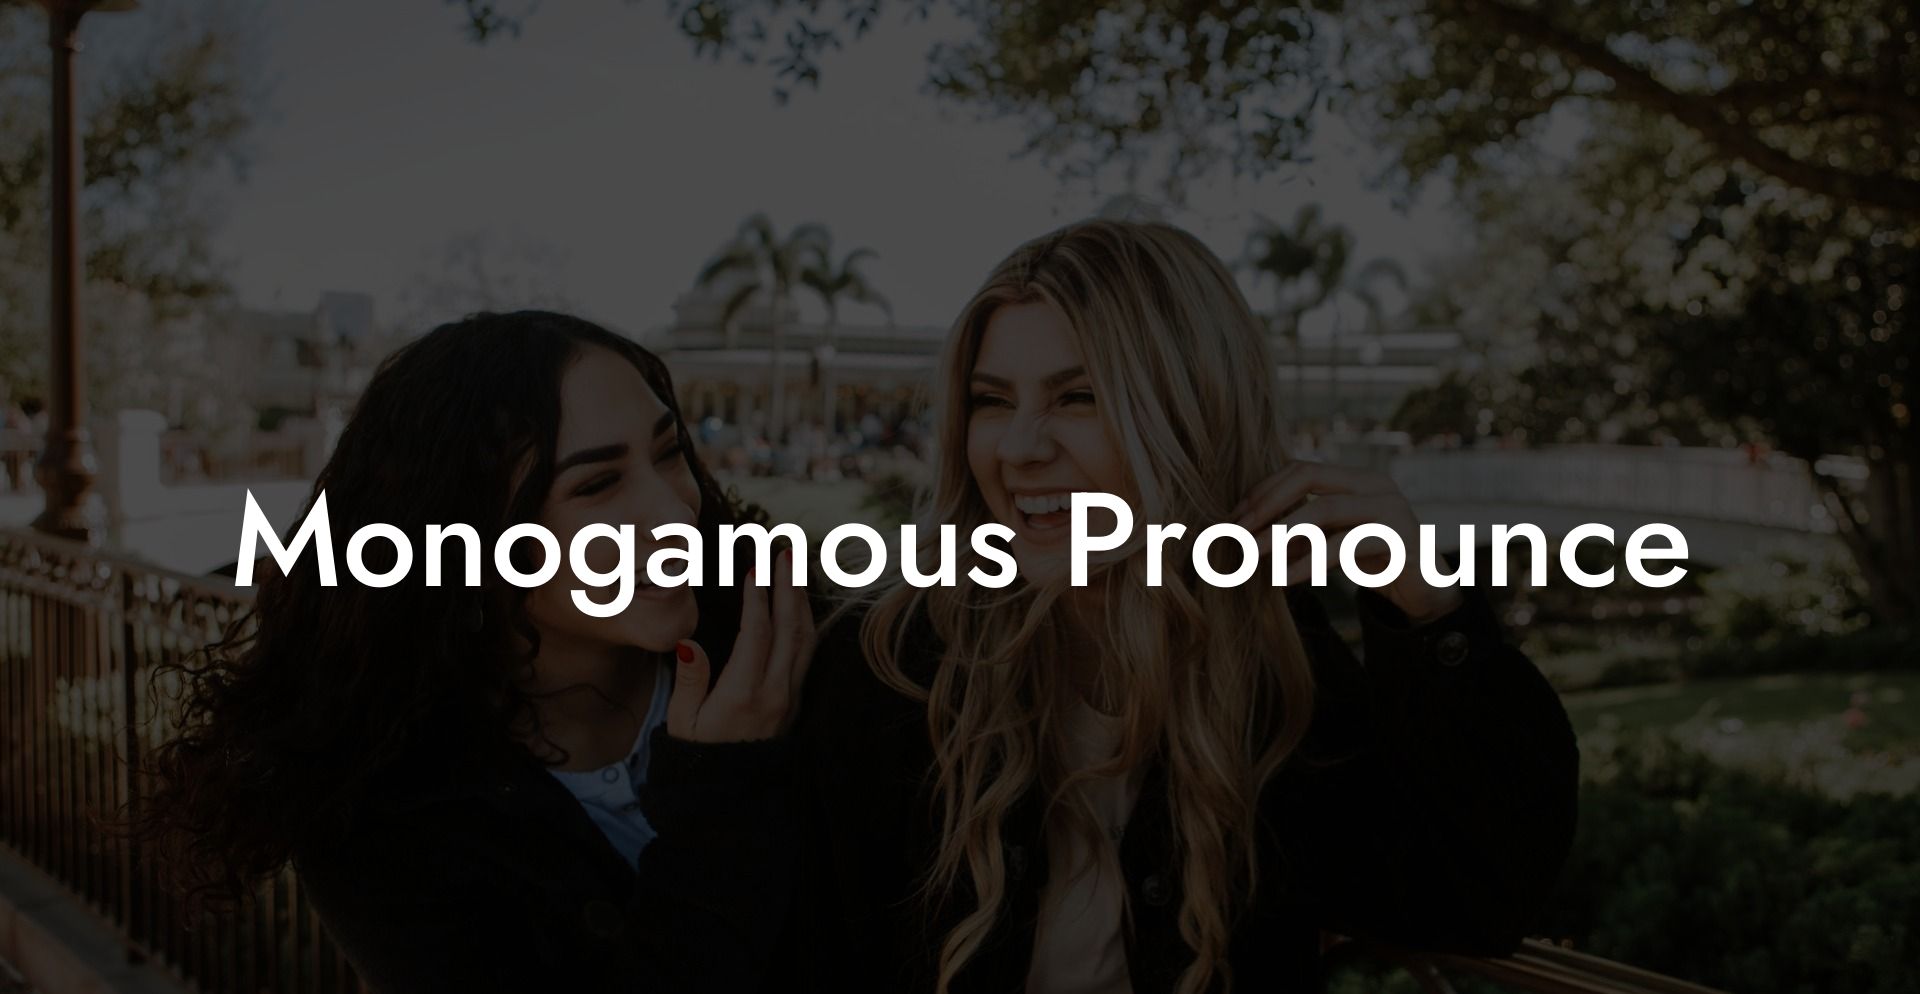 Monogamous Pronounce